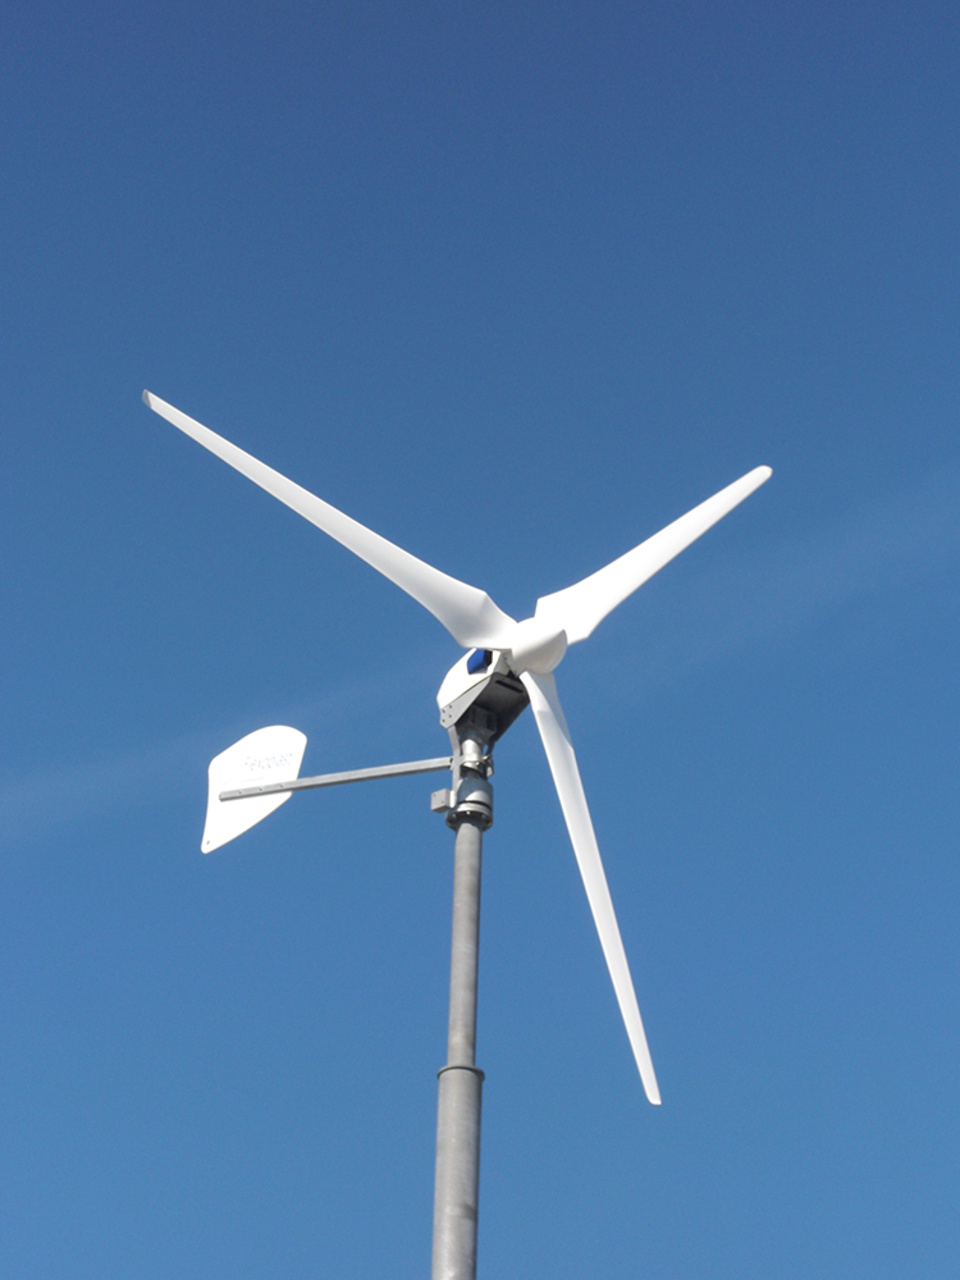 Windkraft2 bei Weitz Elektrotechnik in Seligenstadt